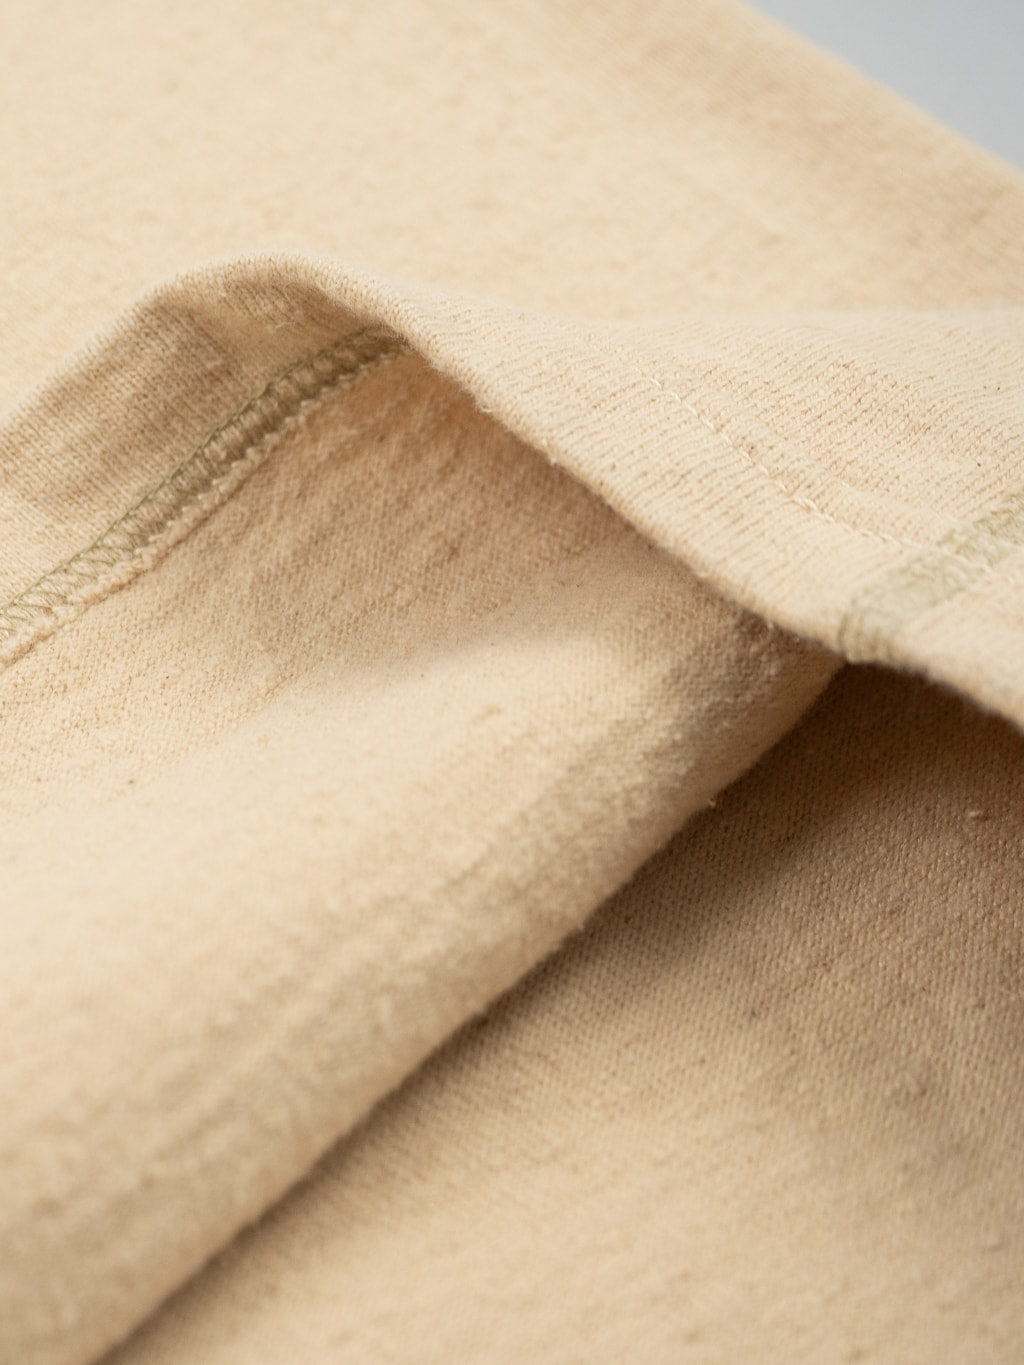 samurai jeans japanese cotton slub tshirt henley kuri fabric